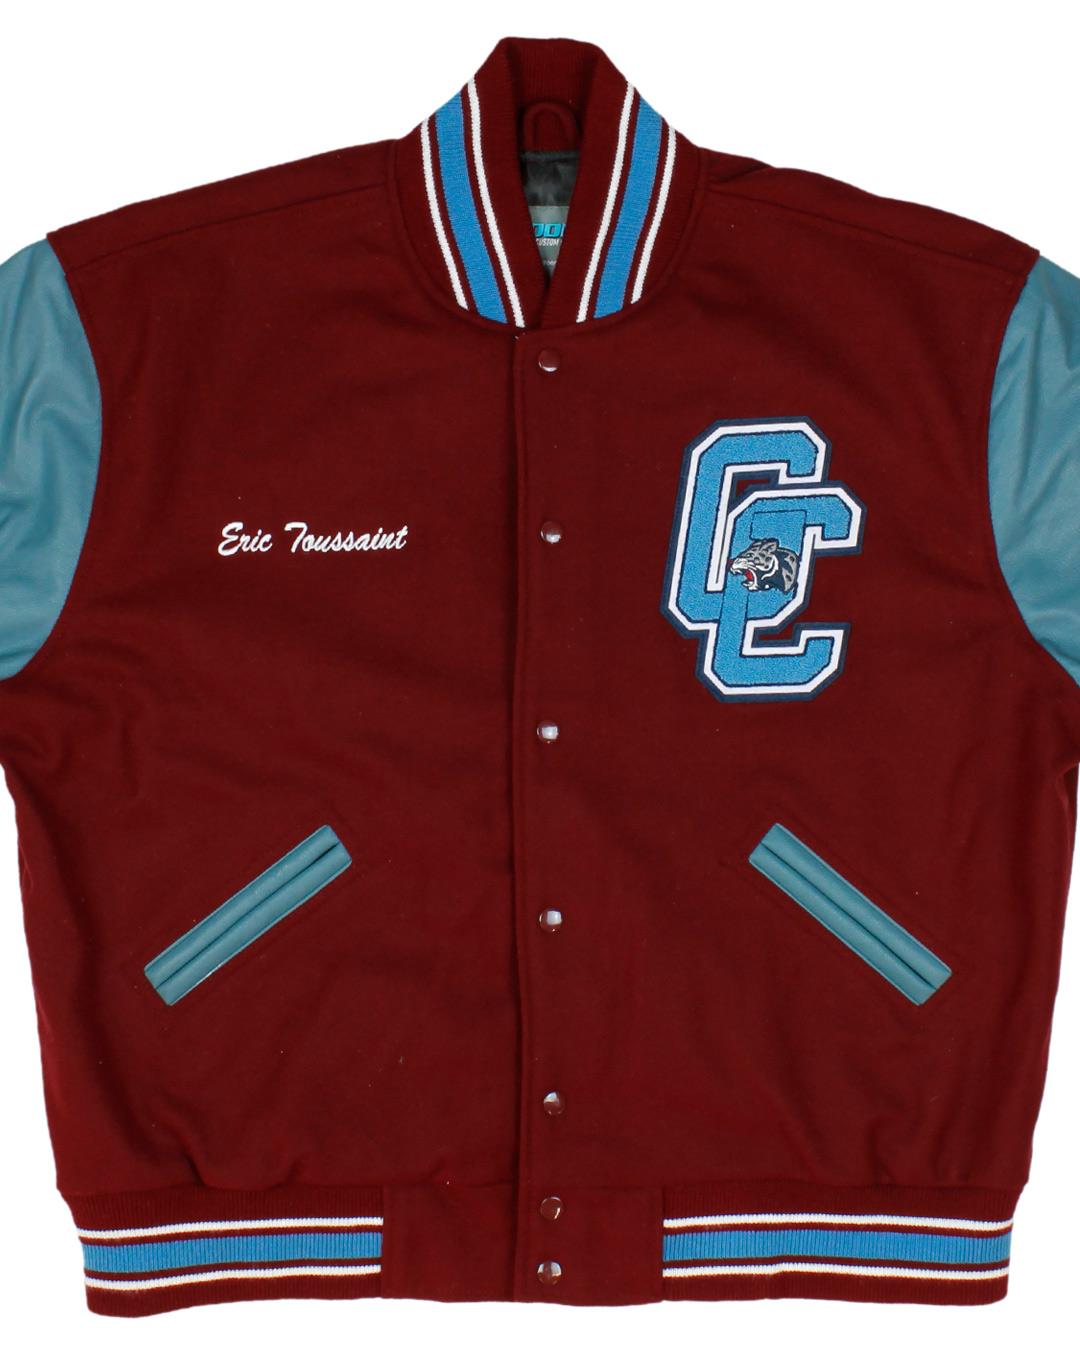 Gadsden County High School Letterman Jacket, Havana, FL - Front